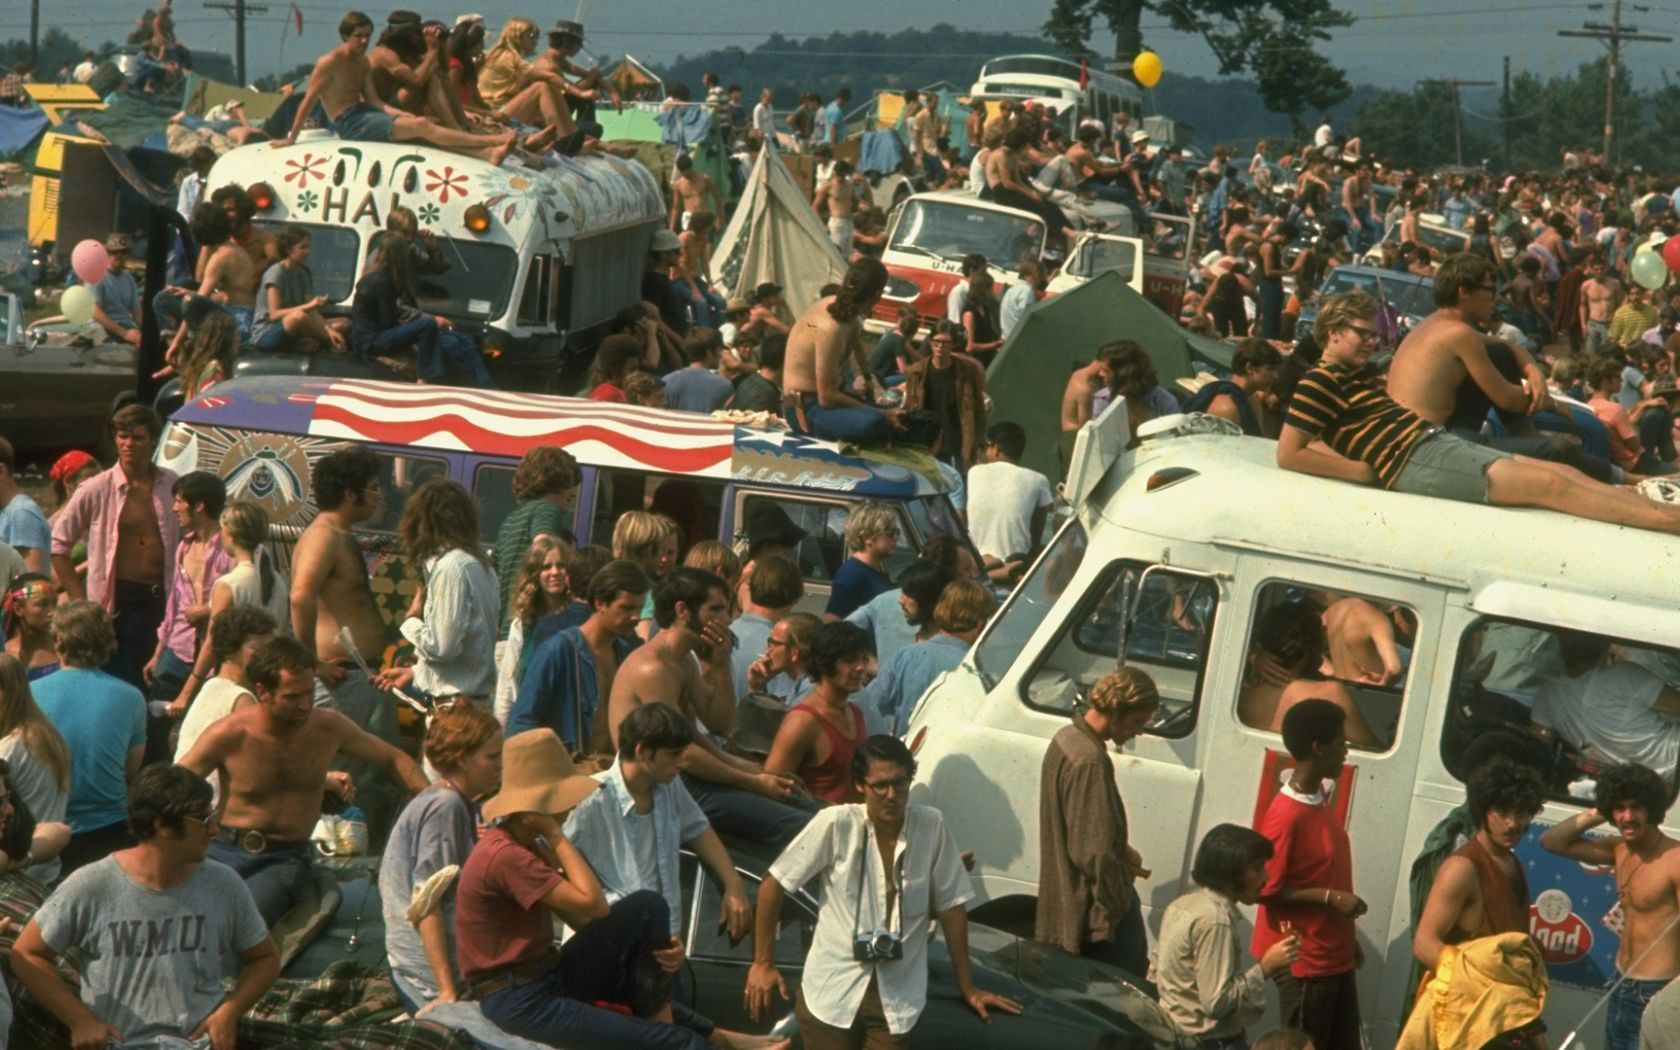 Woodstock Festival Wallpapers Wallpaper Cave